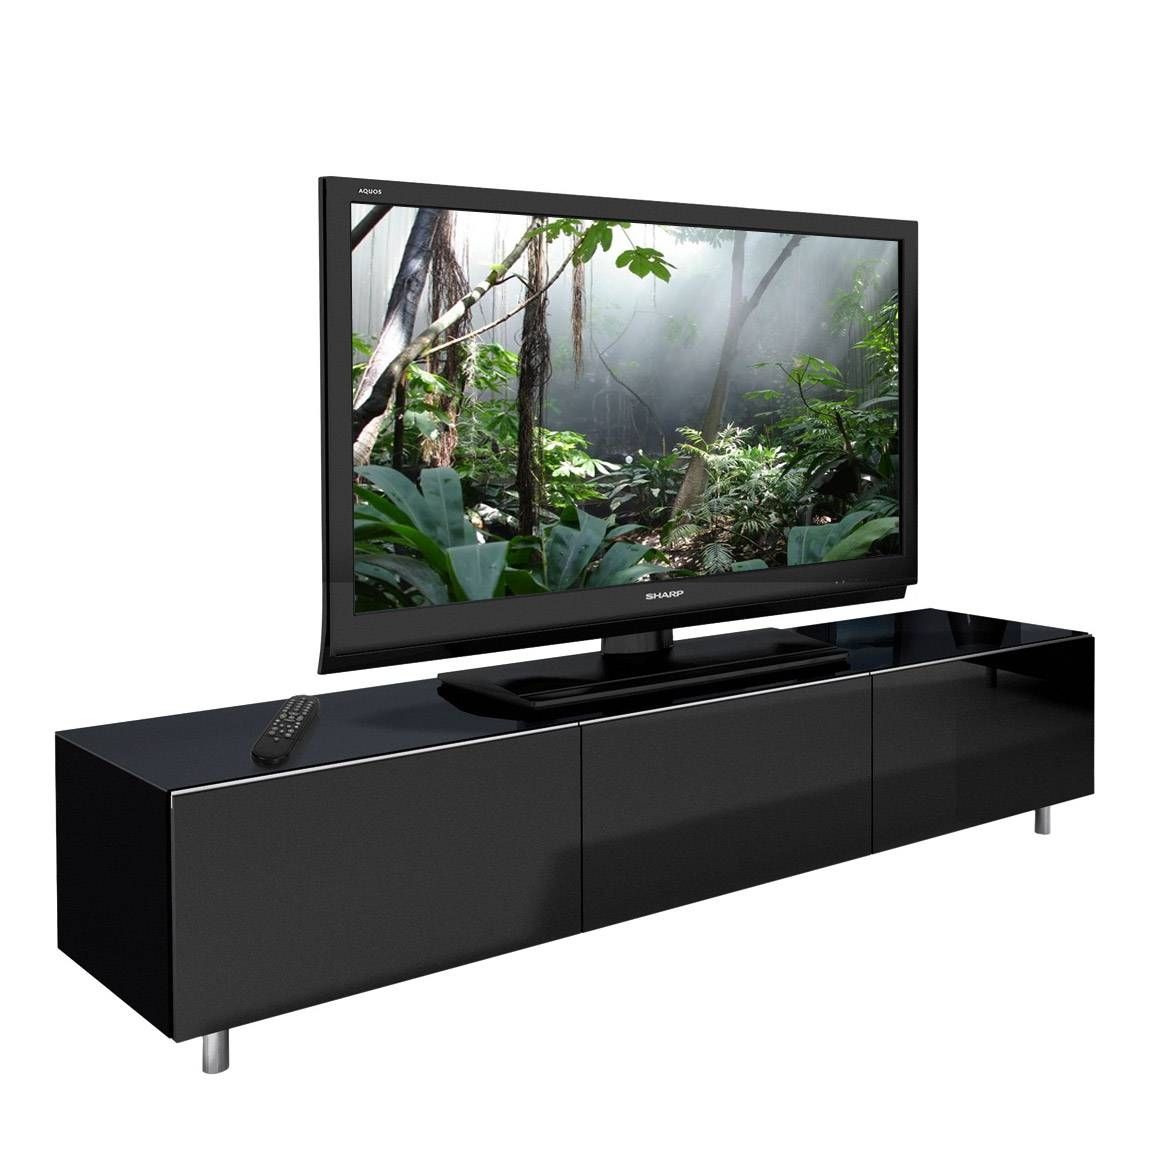 Spectral Just Racks Jrl1650s Gloss Black Tv Cabinet – Just Racks Within Shiny Black Tv Stands (Photo 2 of 15)